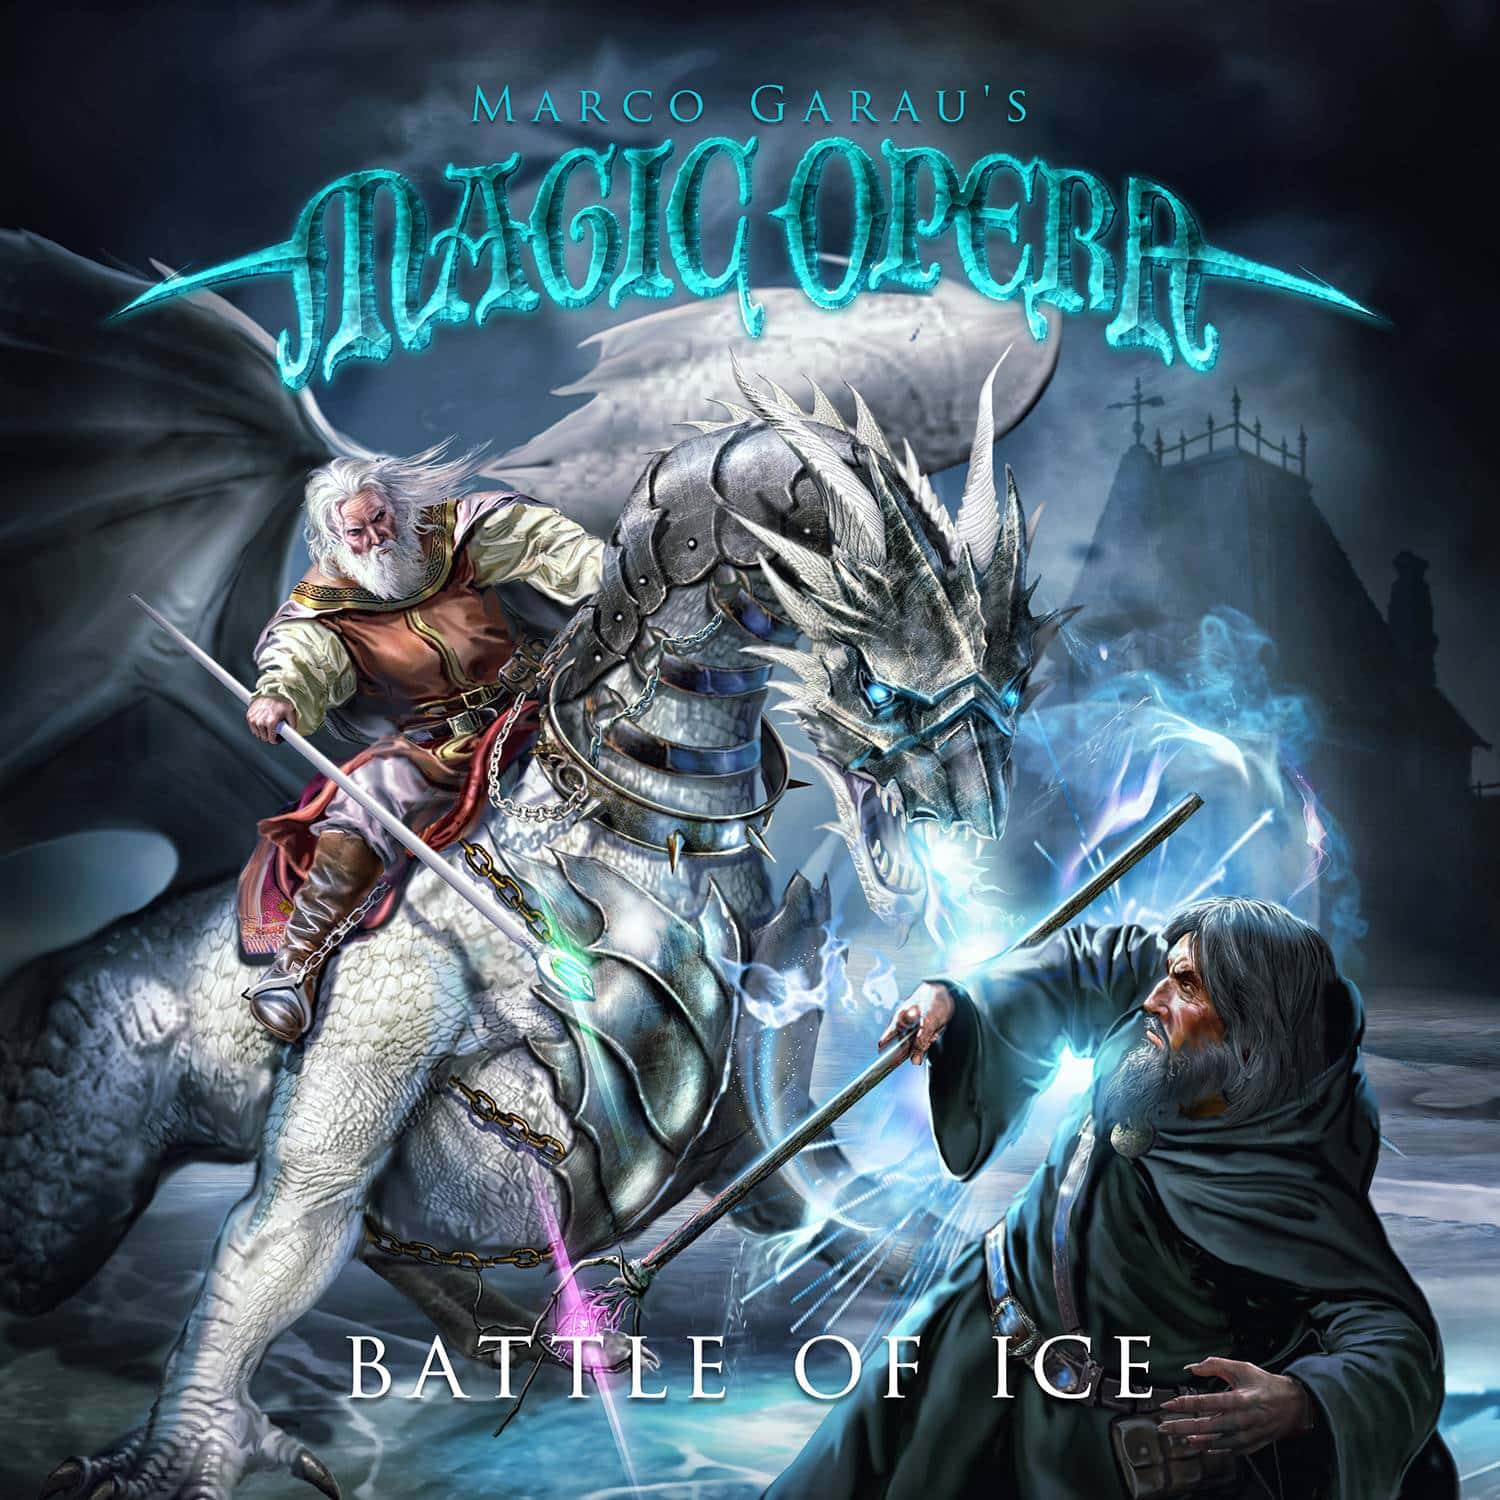 Marco Garau's Magic_Opera:"Battle_of_Ice" CD January 27th 2023 Self Released.